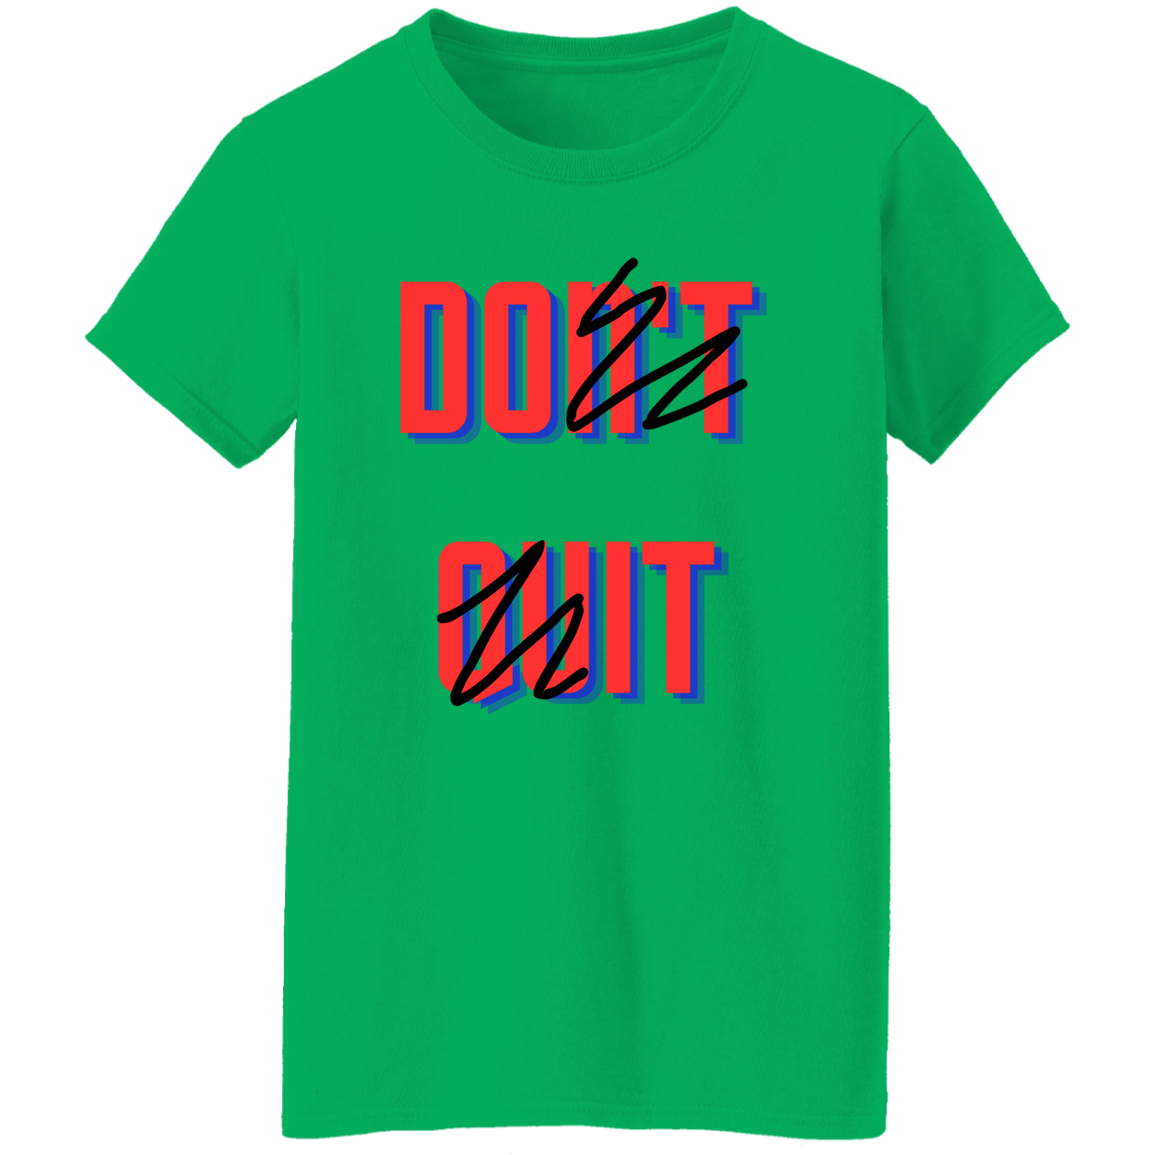 Don't Quit, Do It - Camiseta para mujer, para mujer